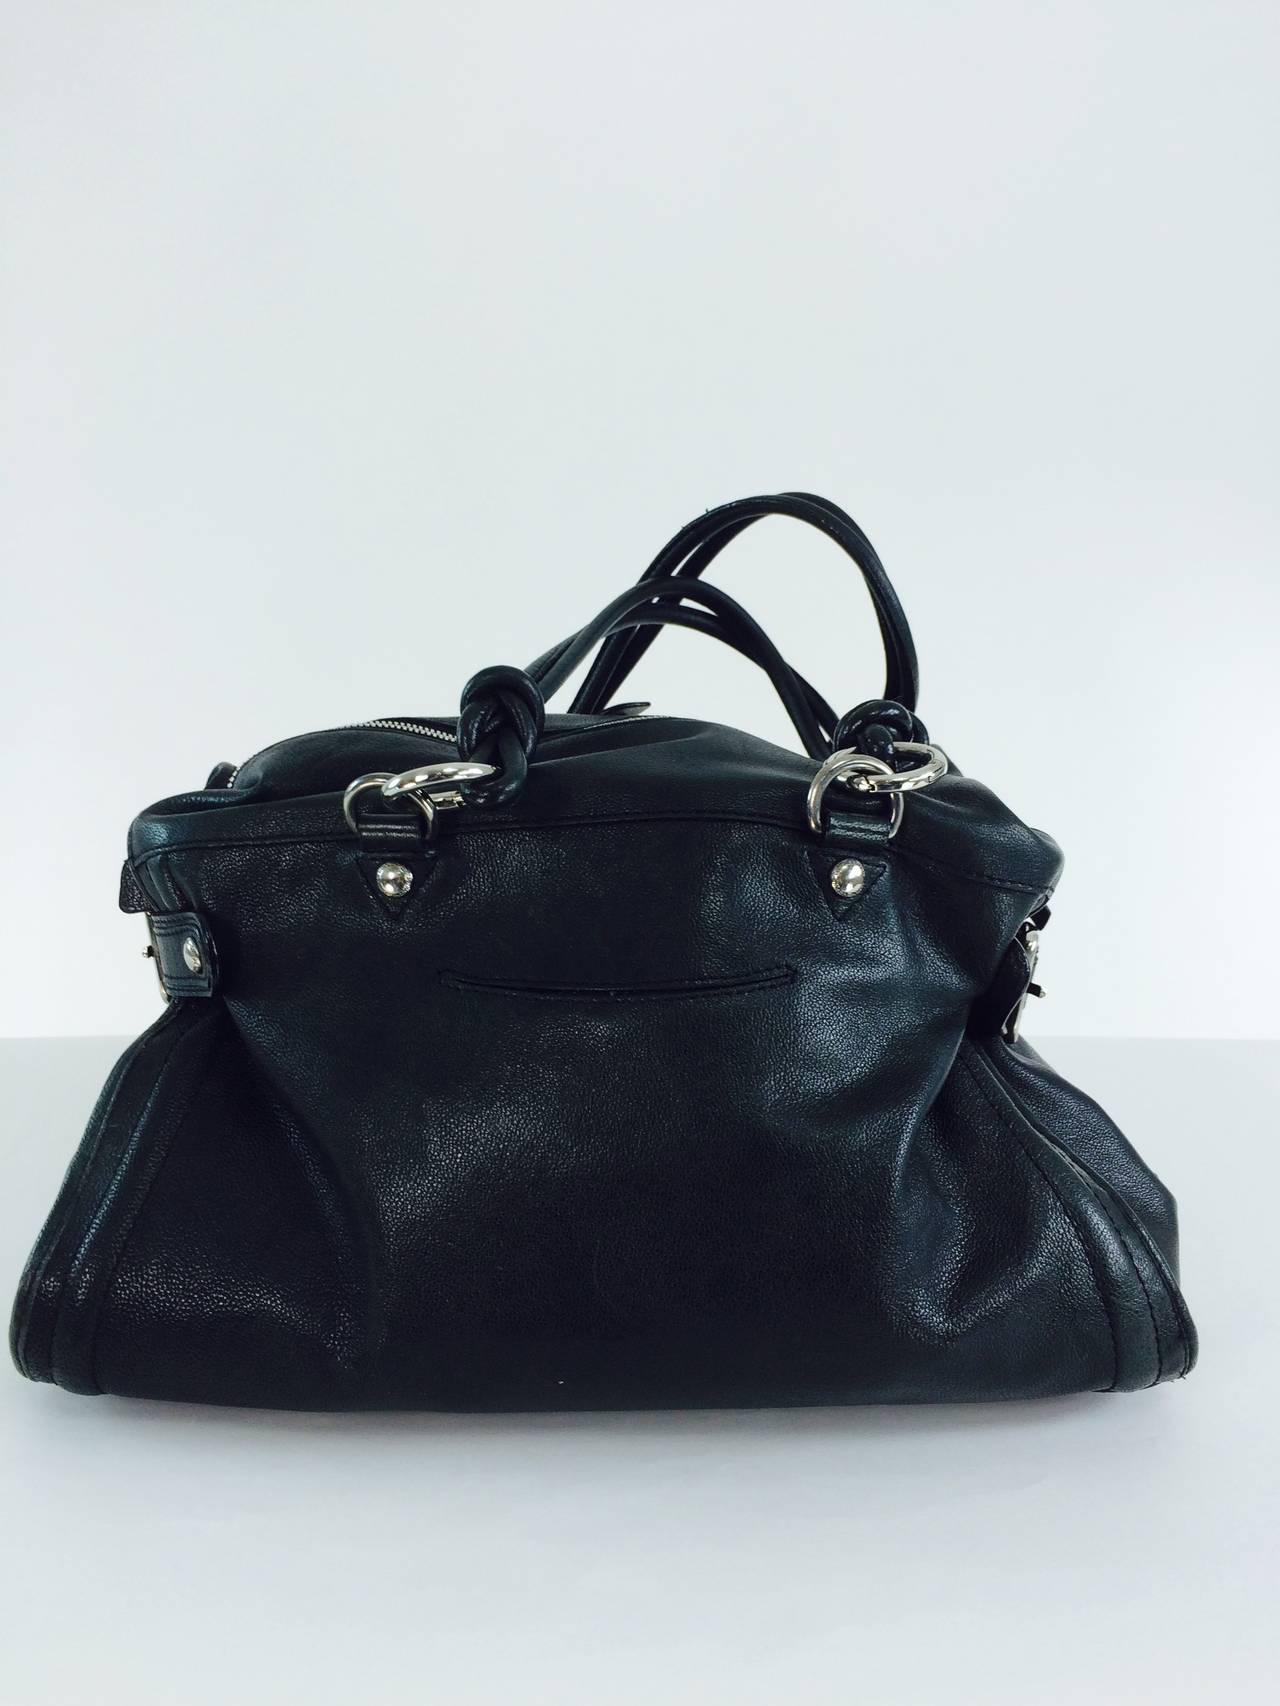 Costume National black leather double handle satchel handbag For Sale ...